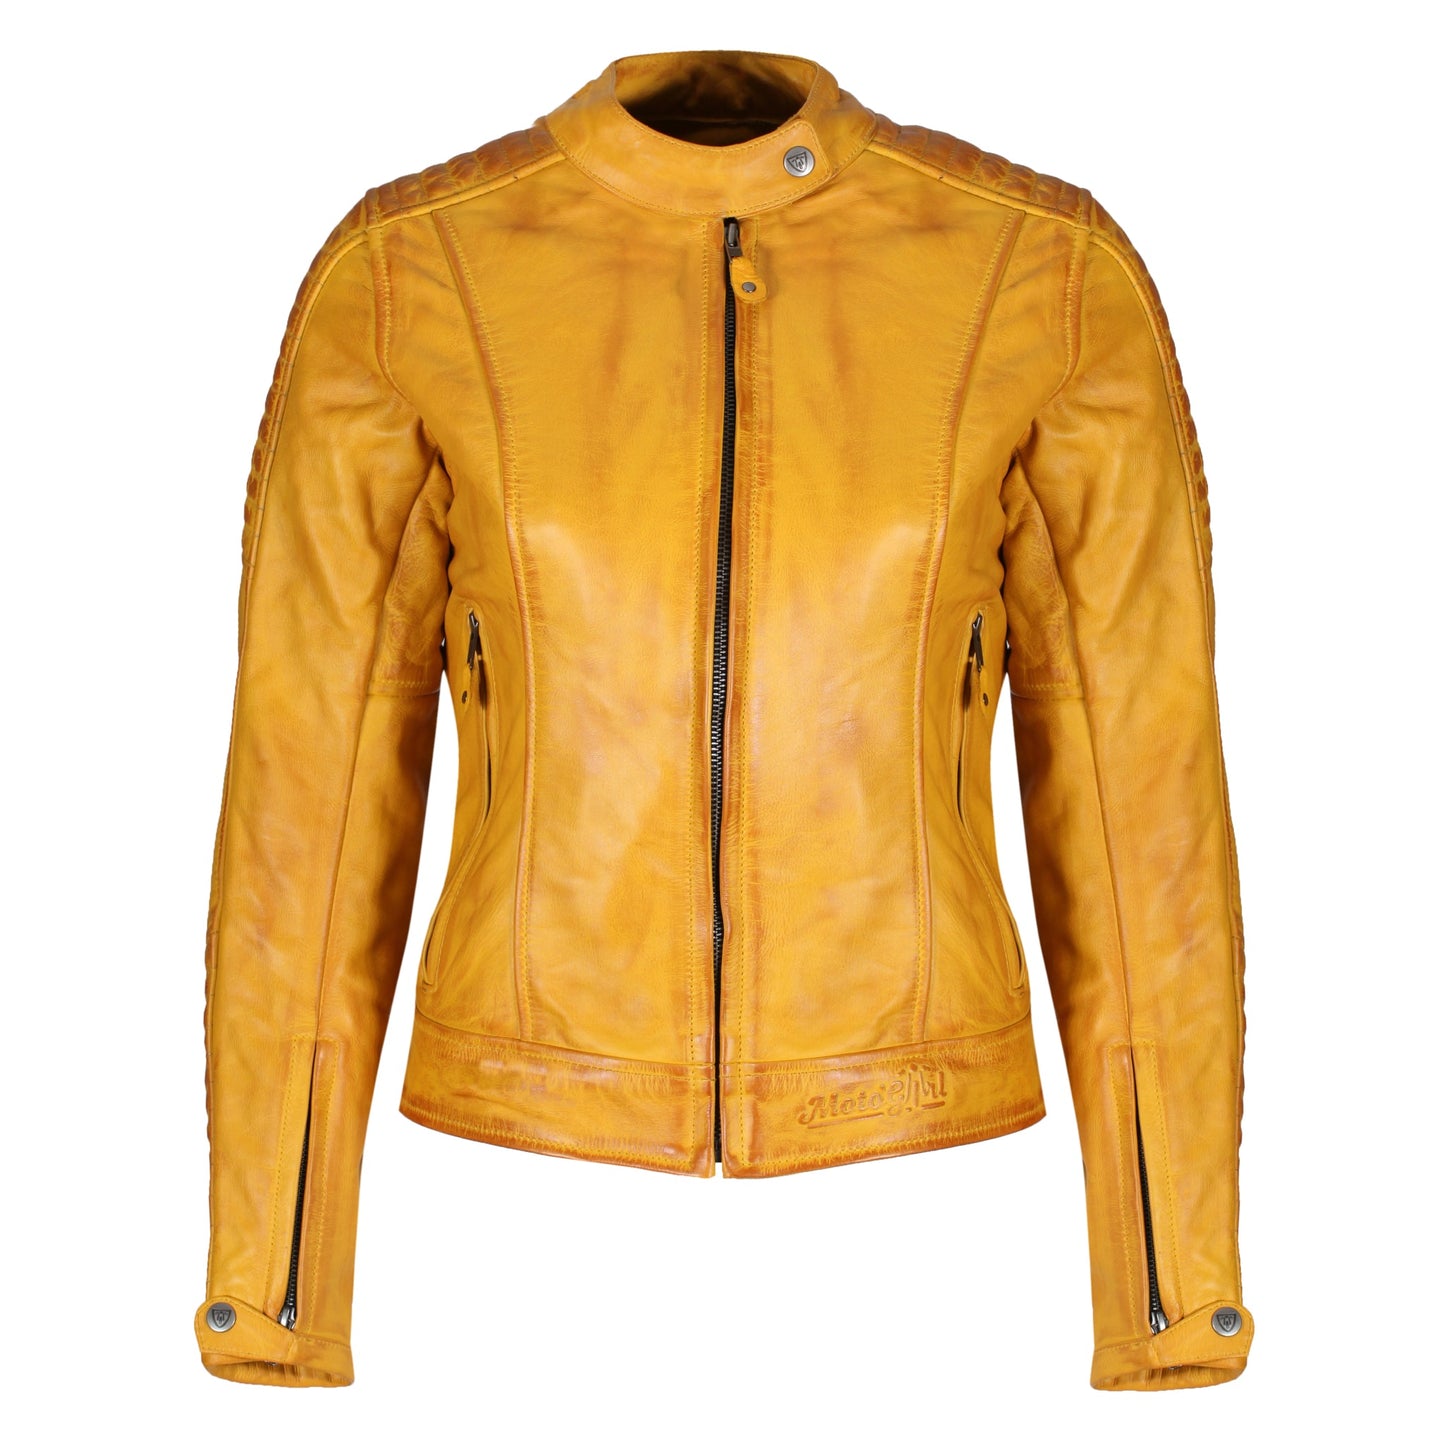 MotoGirl Valerie Yellow Leather Jacket